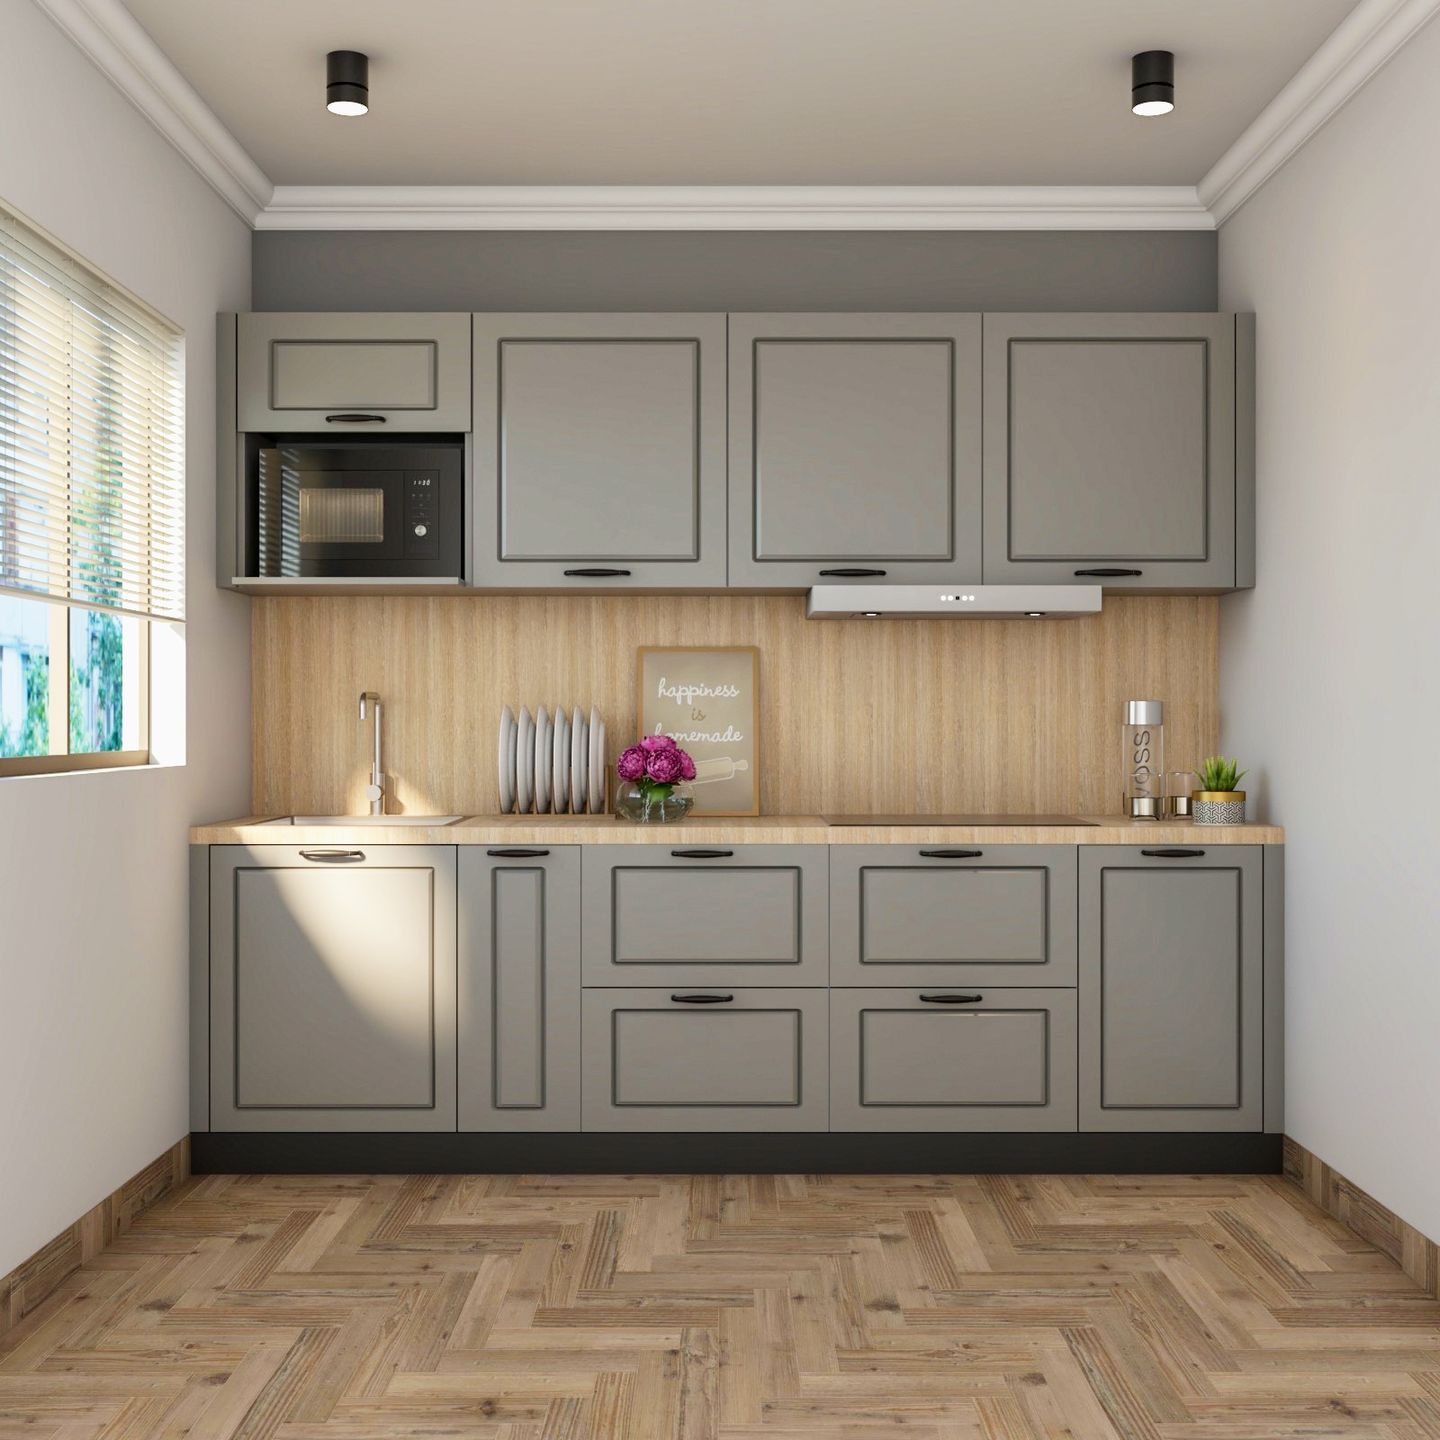 Straight Grey And Wood Kitchen Design With Wooden Backsplash - Livspace